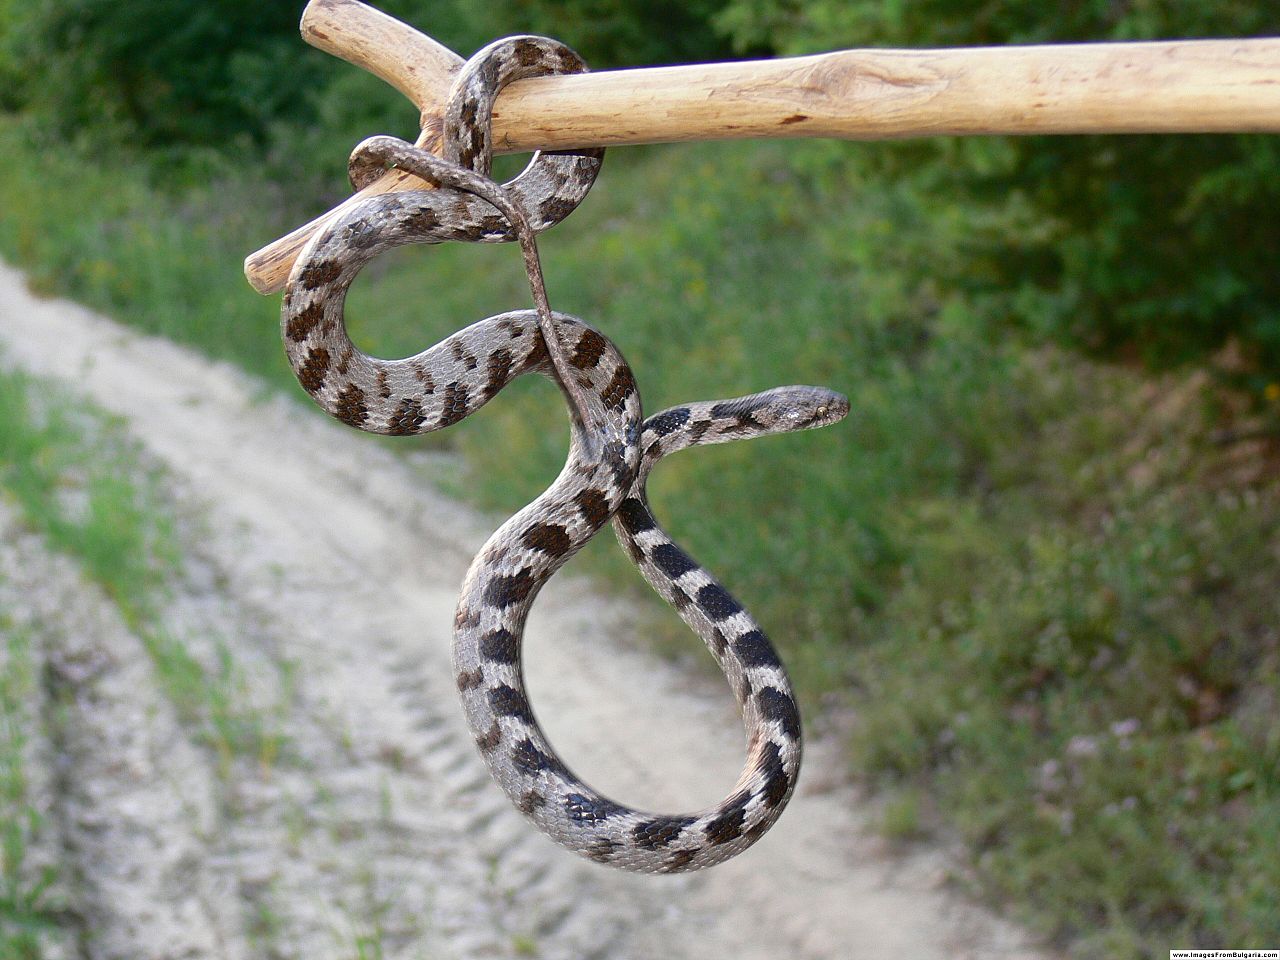 Caucasian cat snake